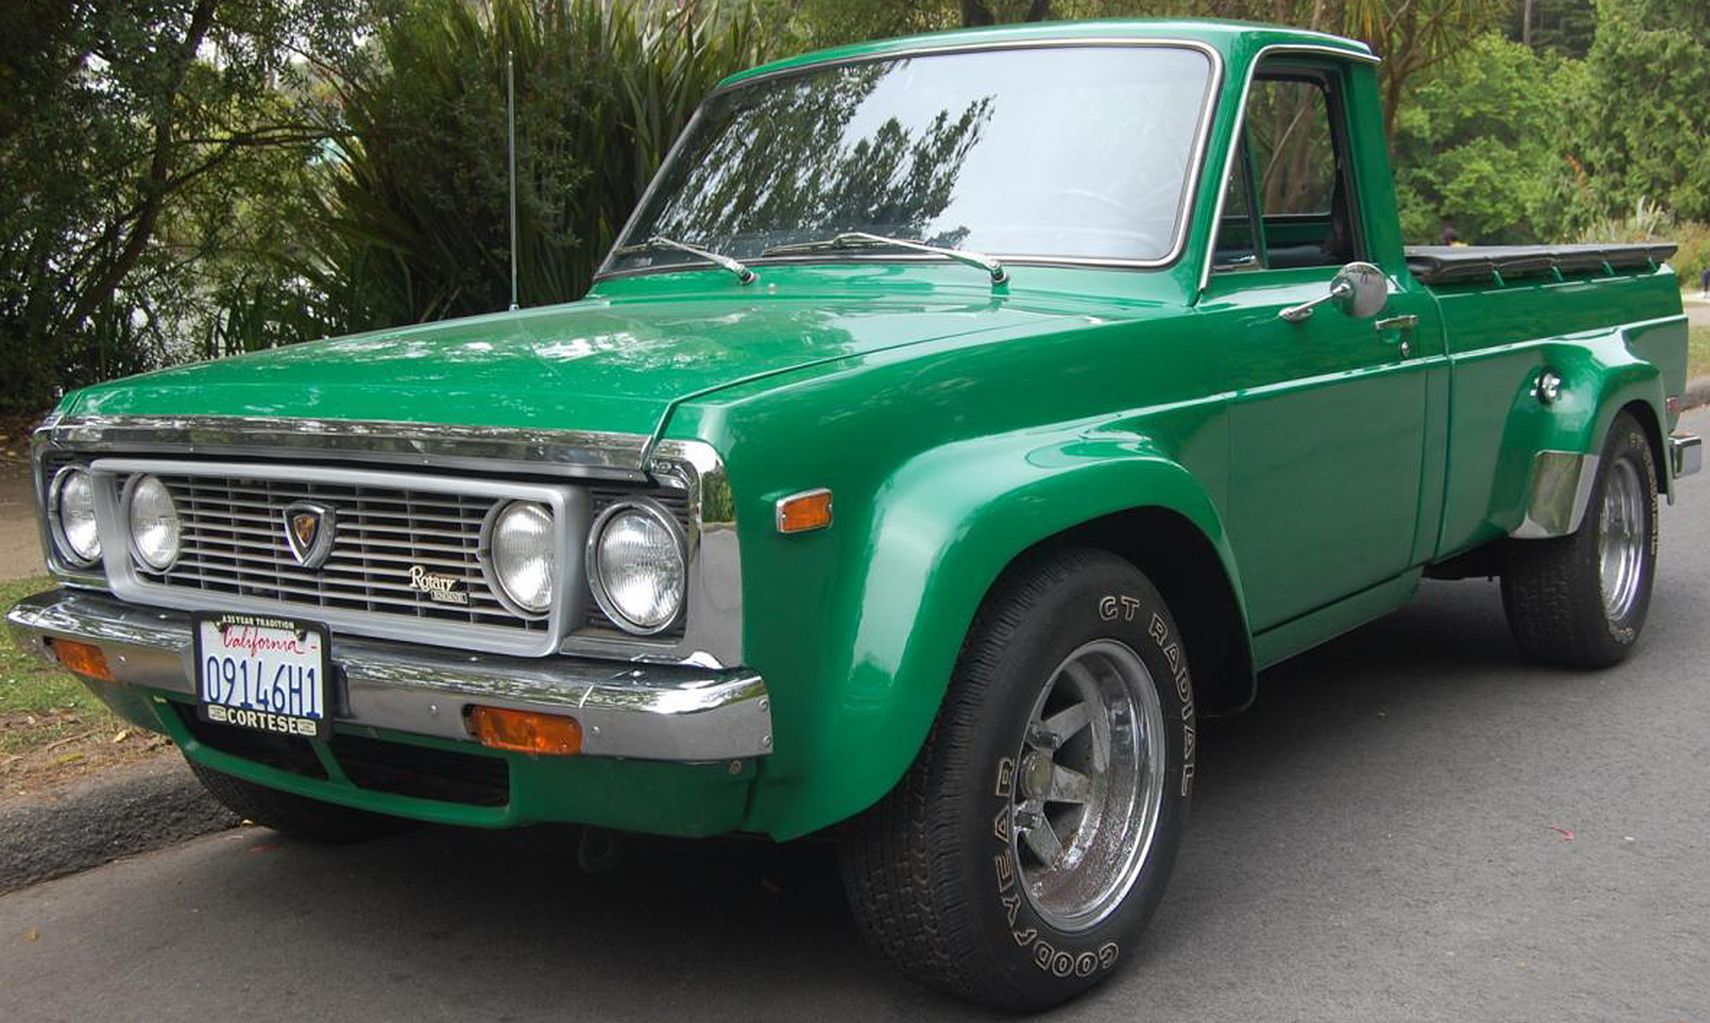 1974-1977 Mazda Rotary Engine Pickup: The Rotary-Engined Wonder